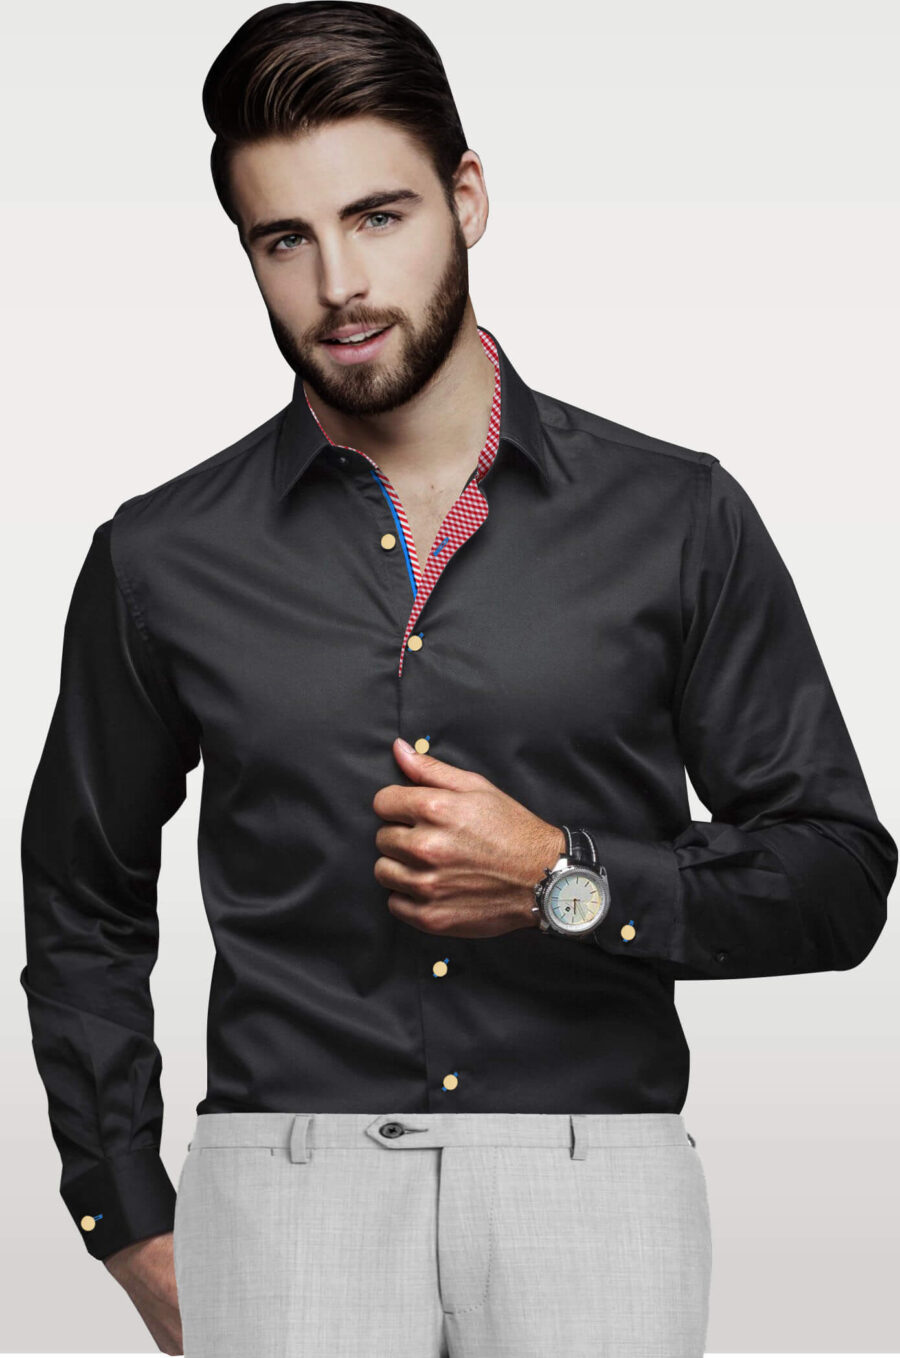 Mens Solid SHORT SLeeve Premium Regular fit Dress Shirts, 26 colors, size  S~5XL | eBay